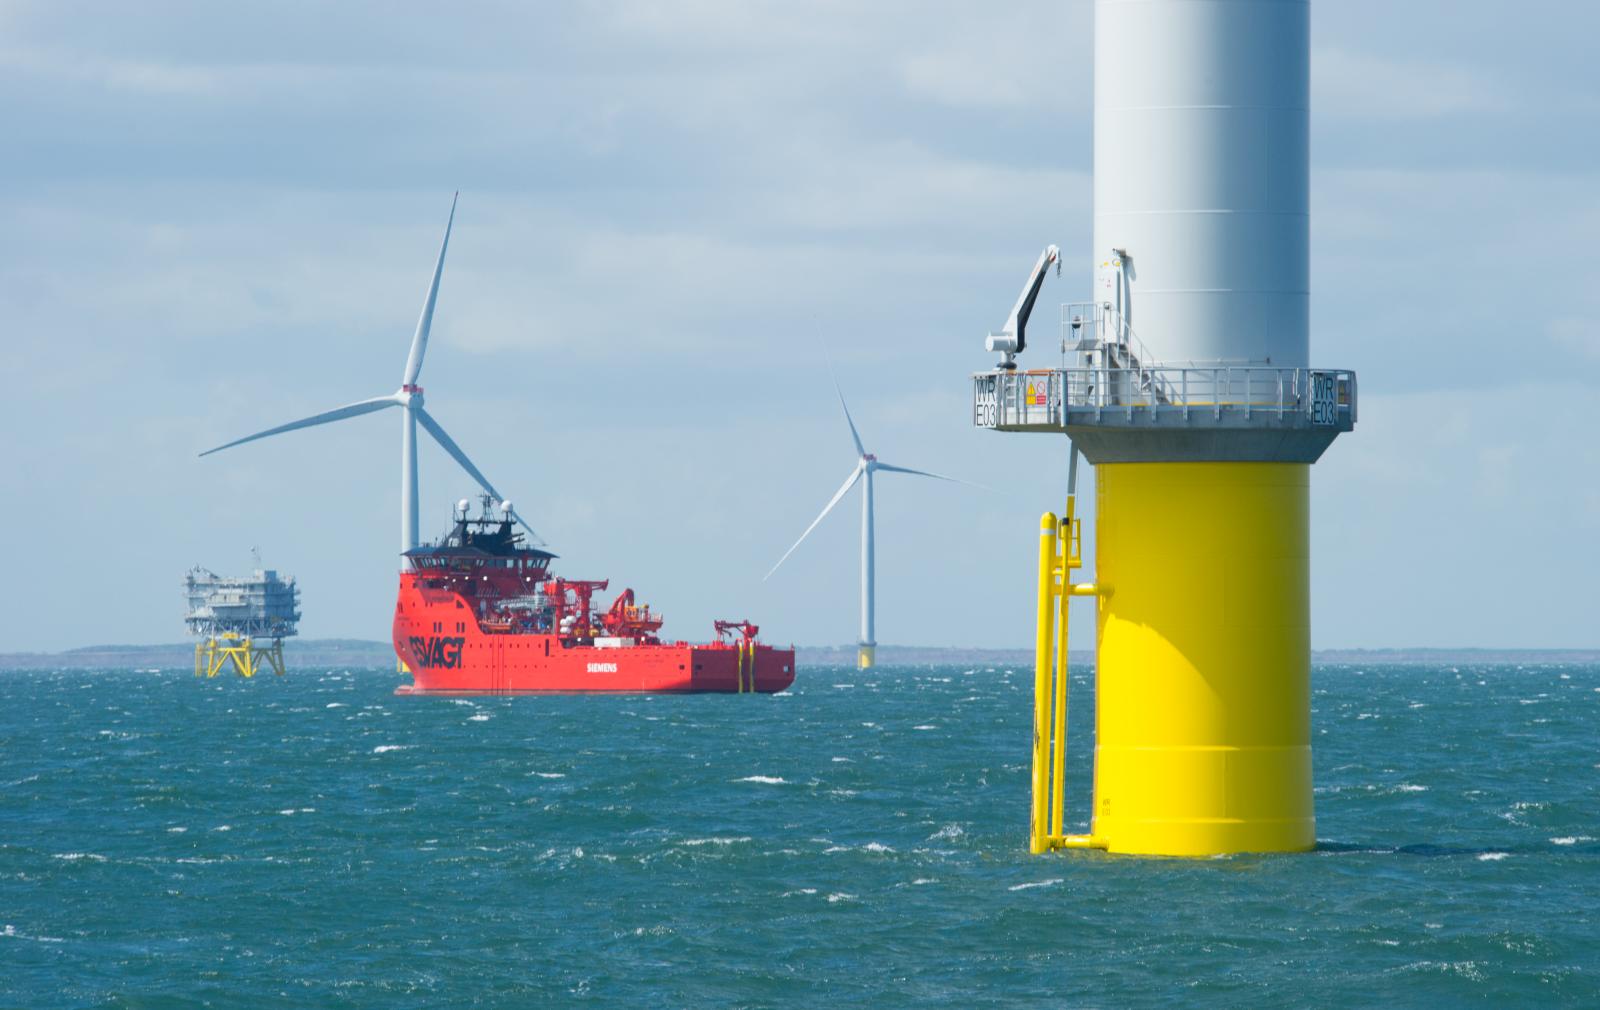 Wind farm at sea under construction